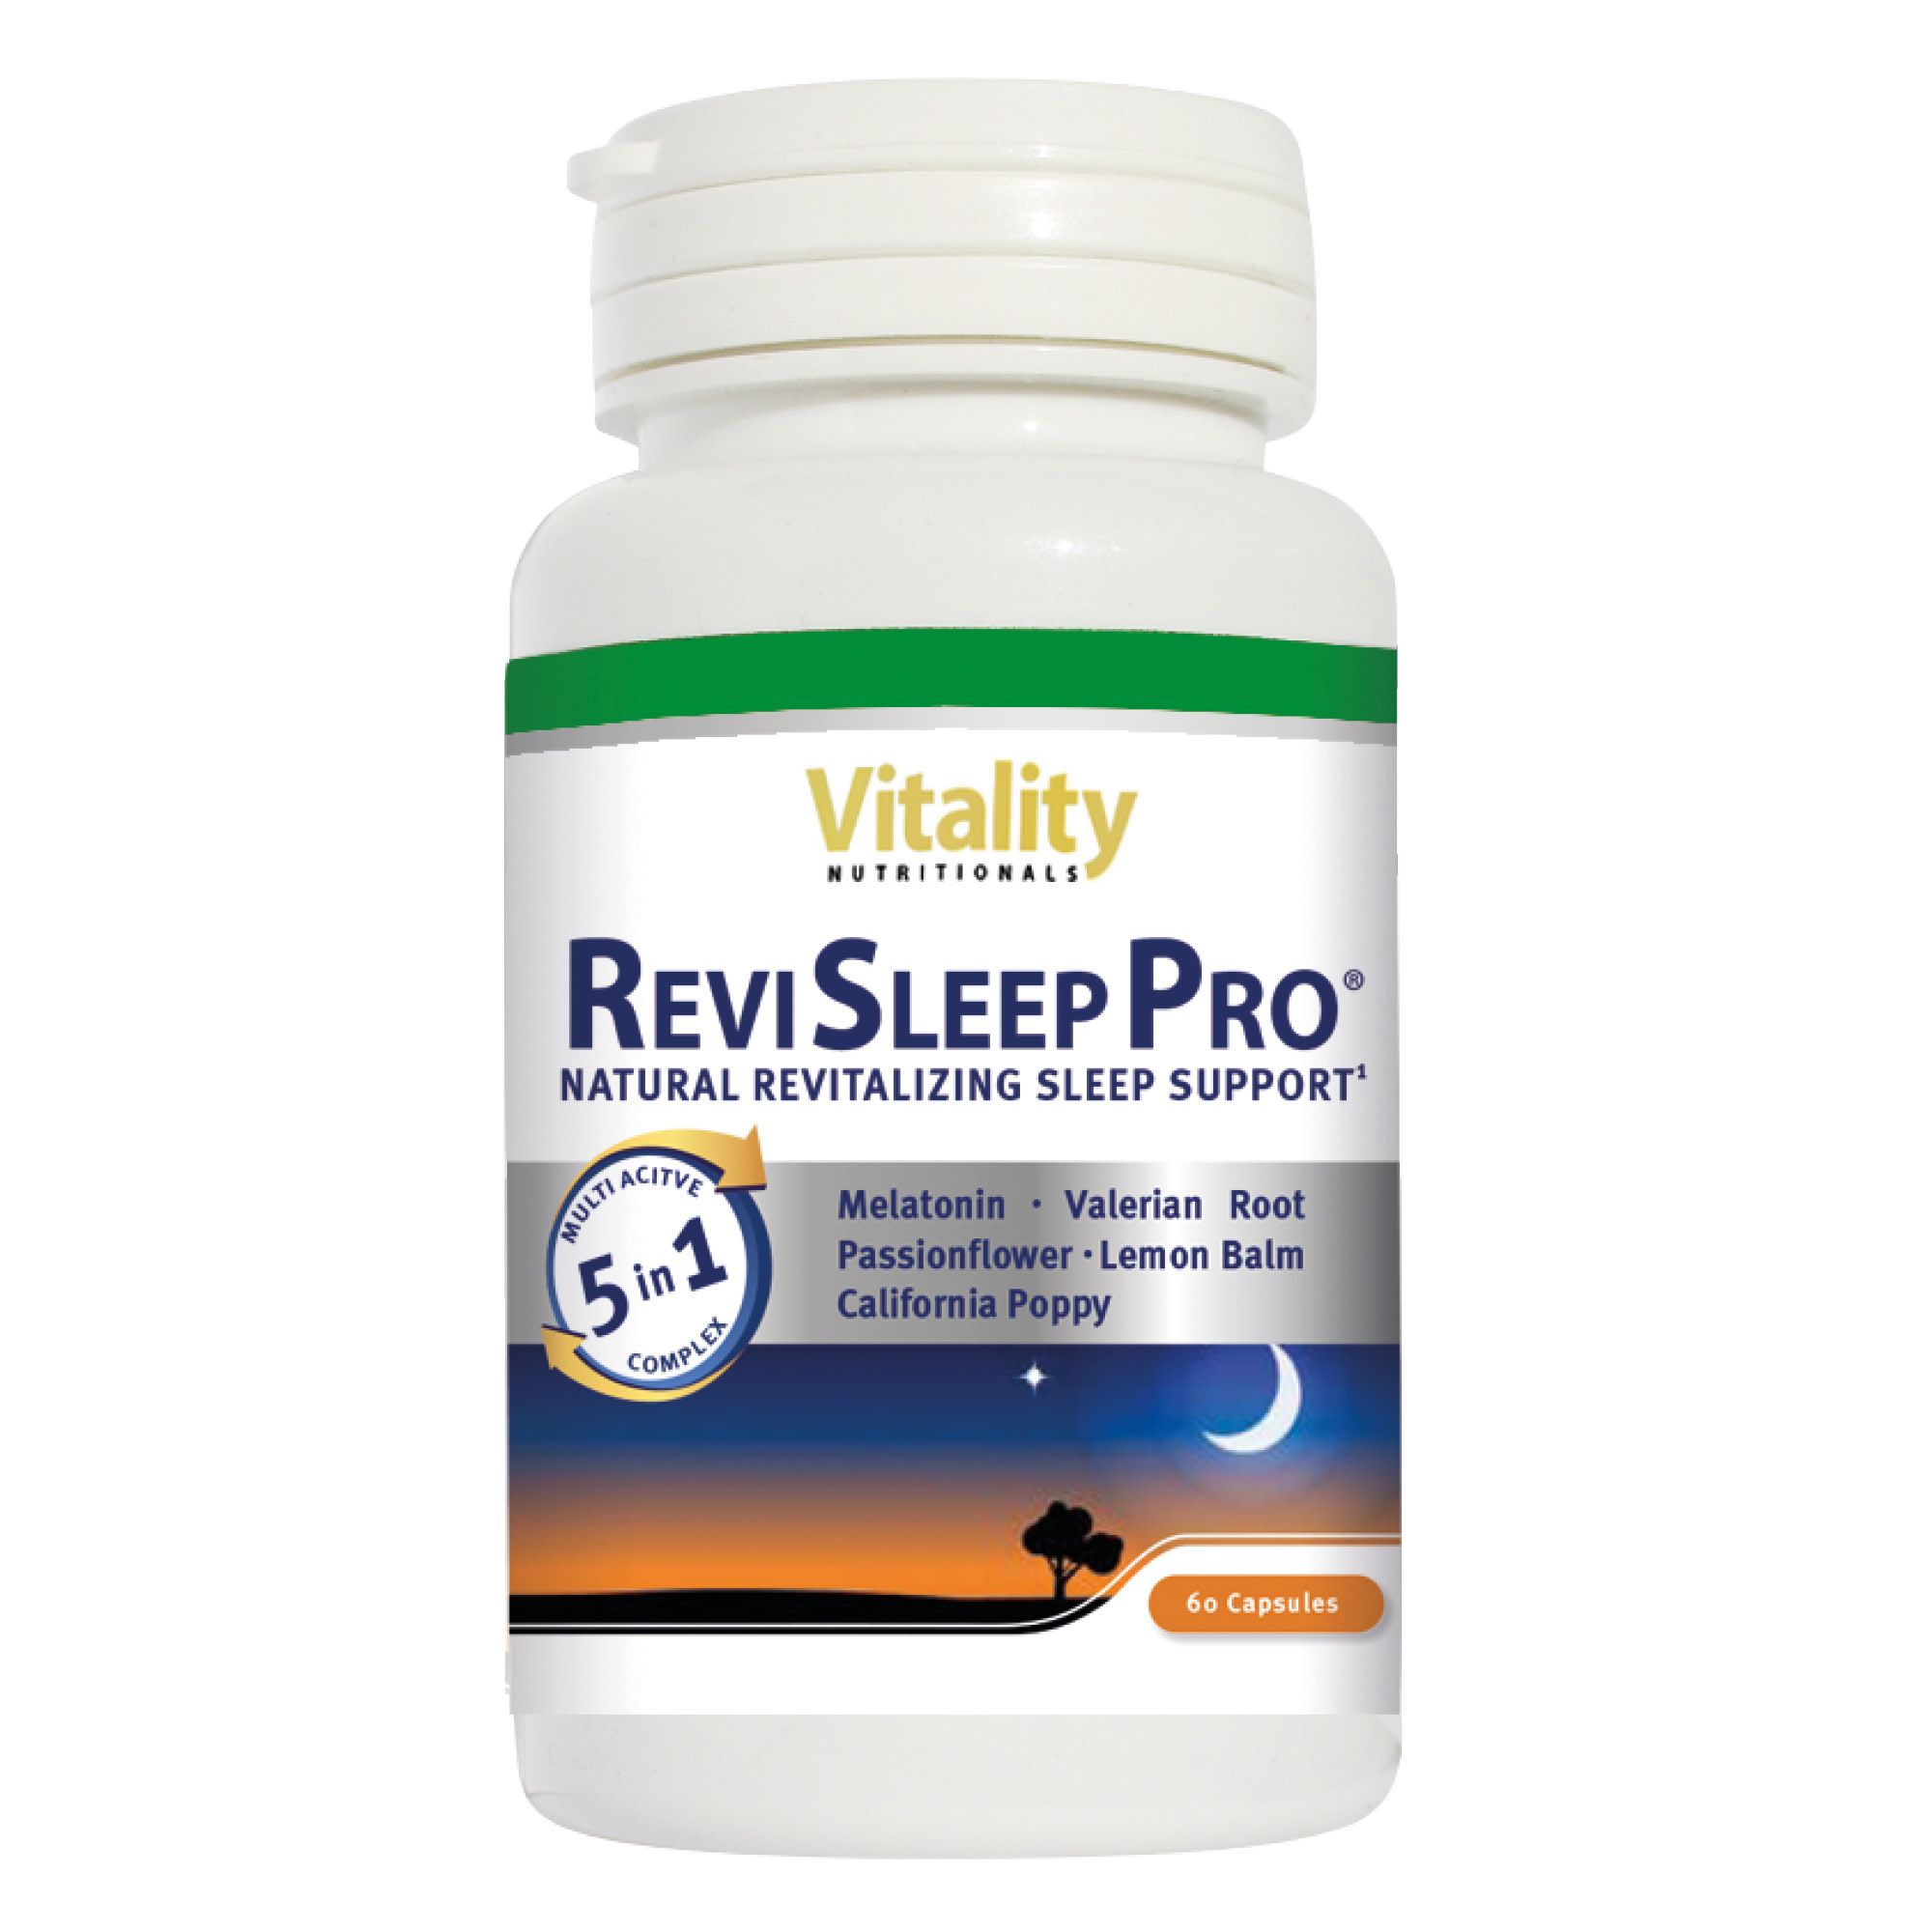 Vitality Nutritionals ReviSleep Pro